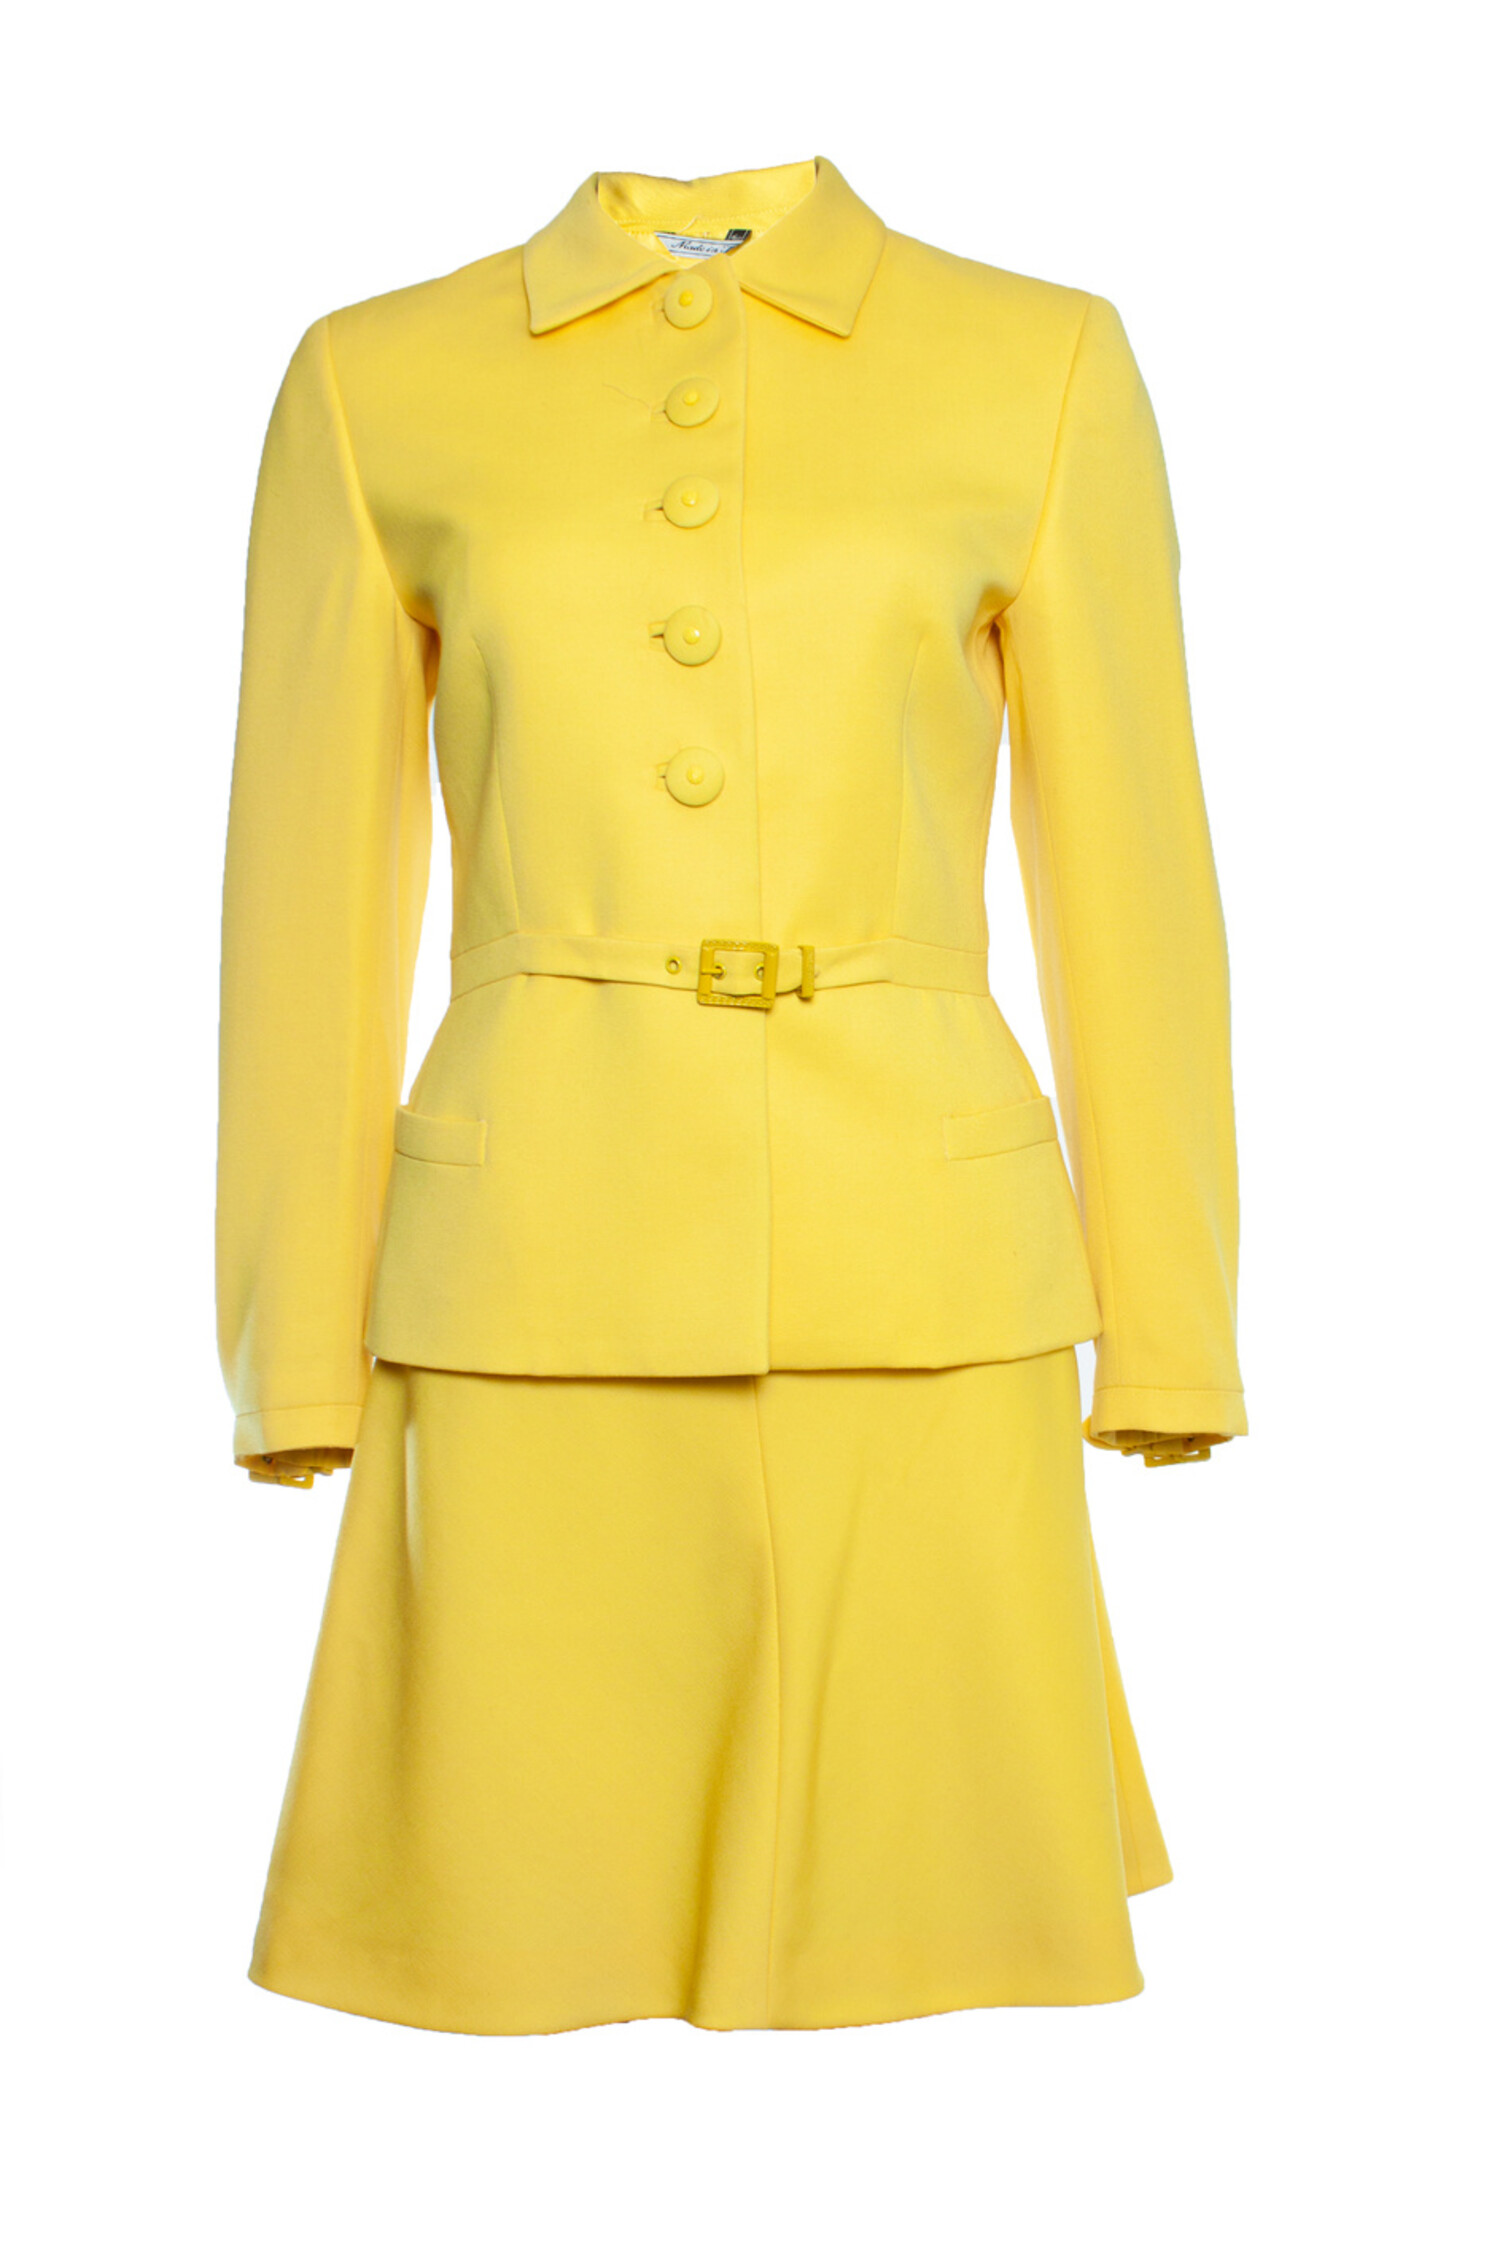 Gianni Versace Couture, Yellow twin suit - Unique Designer Pieces